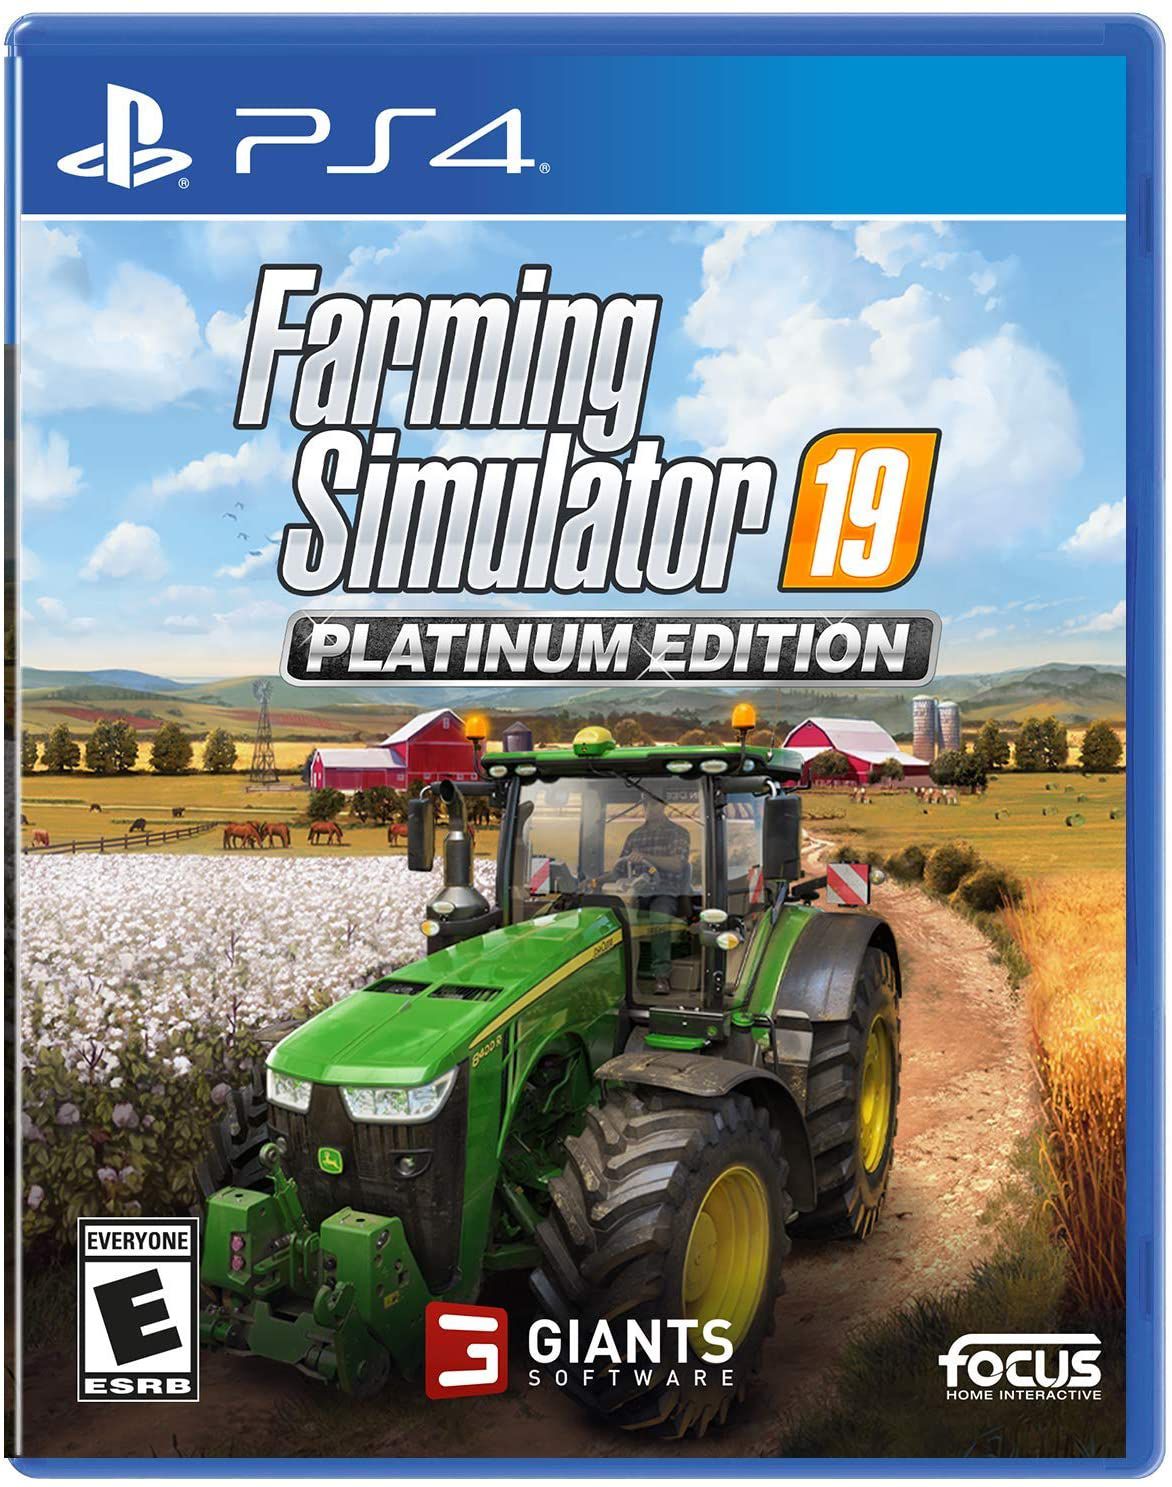 Farming Simulator 20 - Switch - Game Games - Loja de Games Online